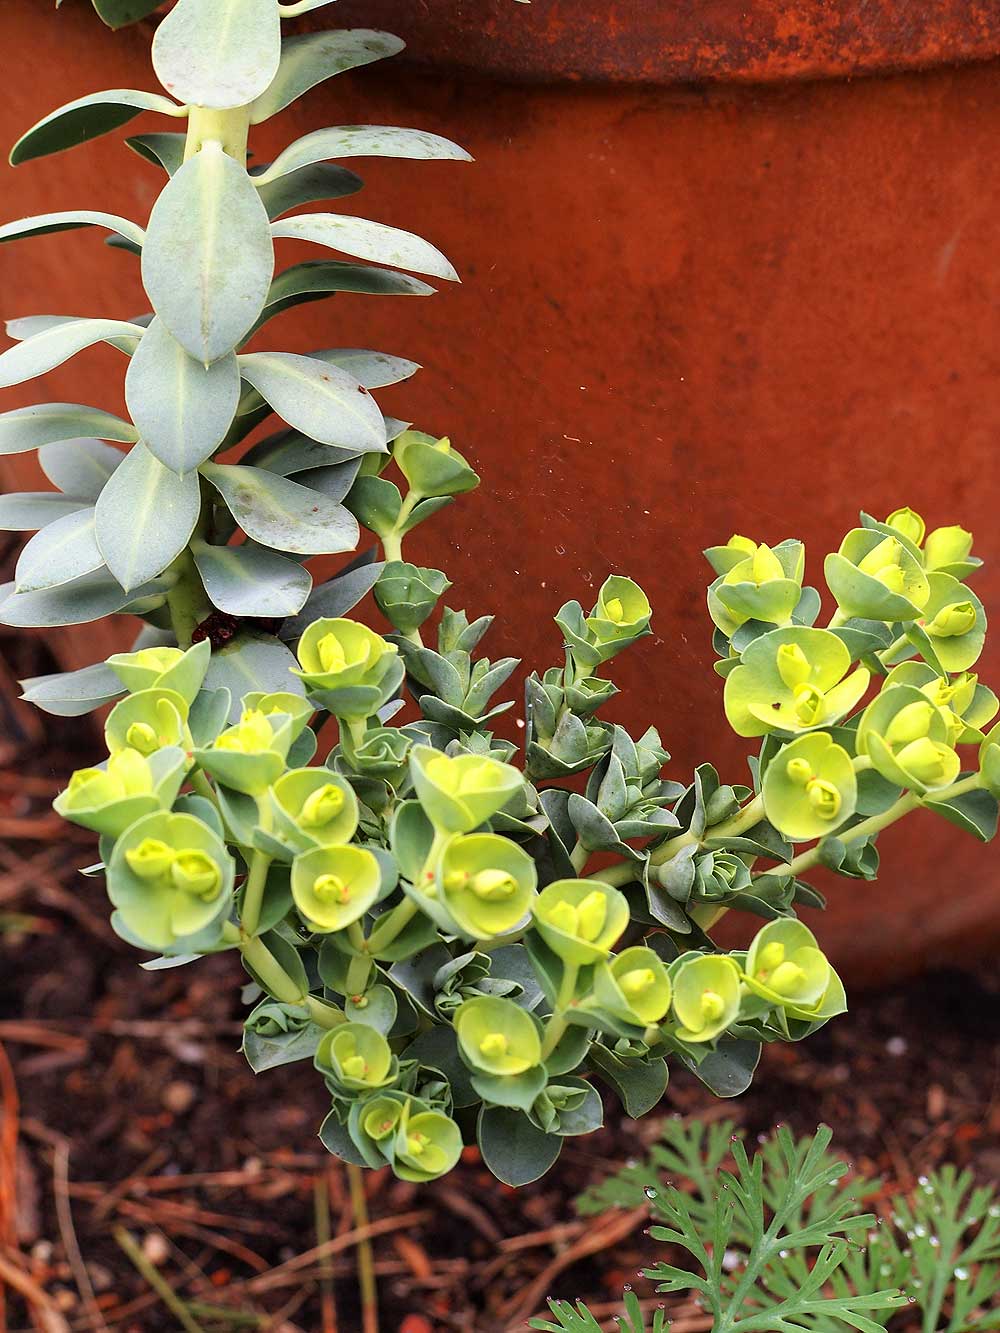 Euphorbia mysrinites, Donkeytail Spurge.